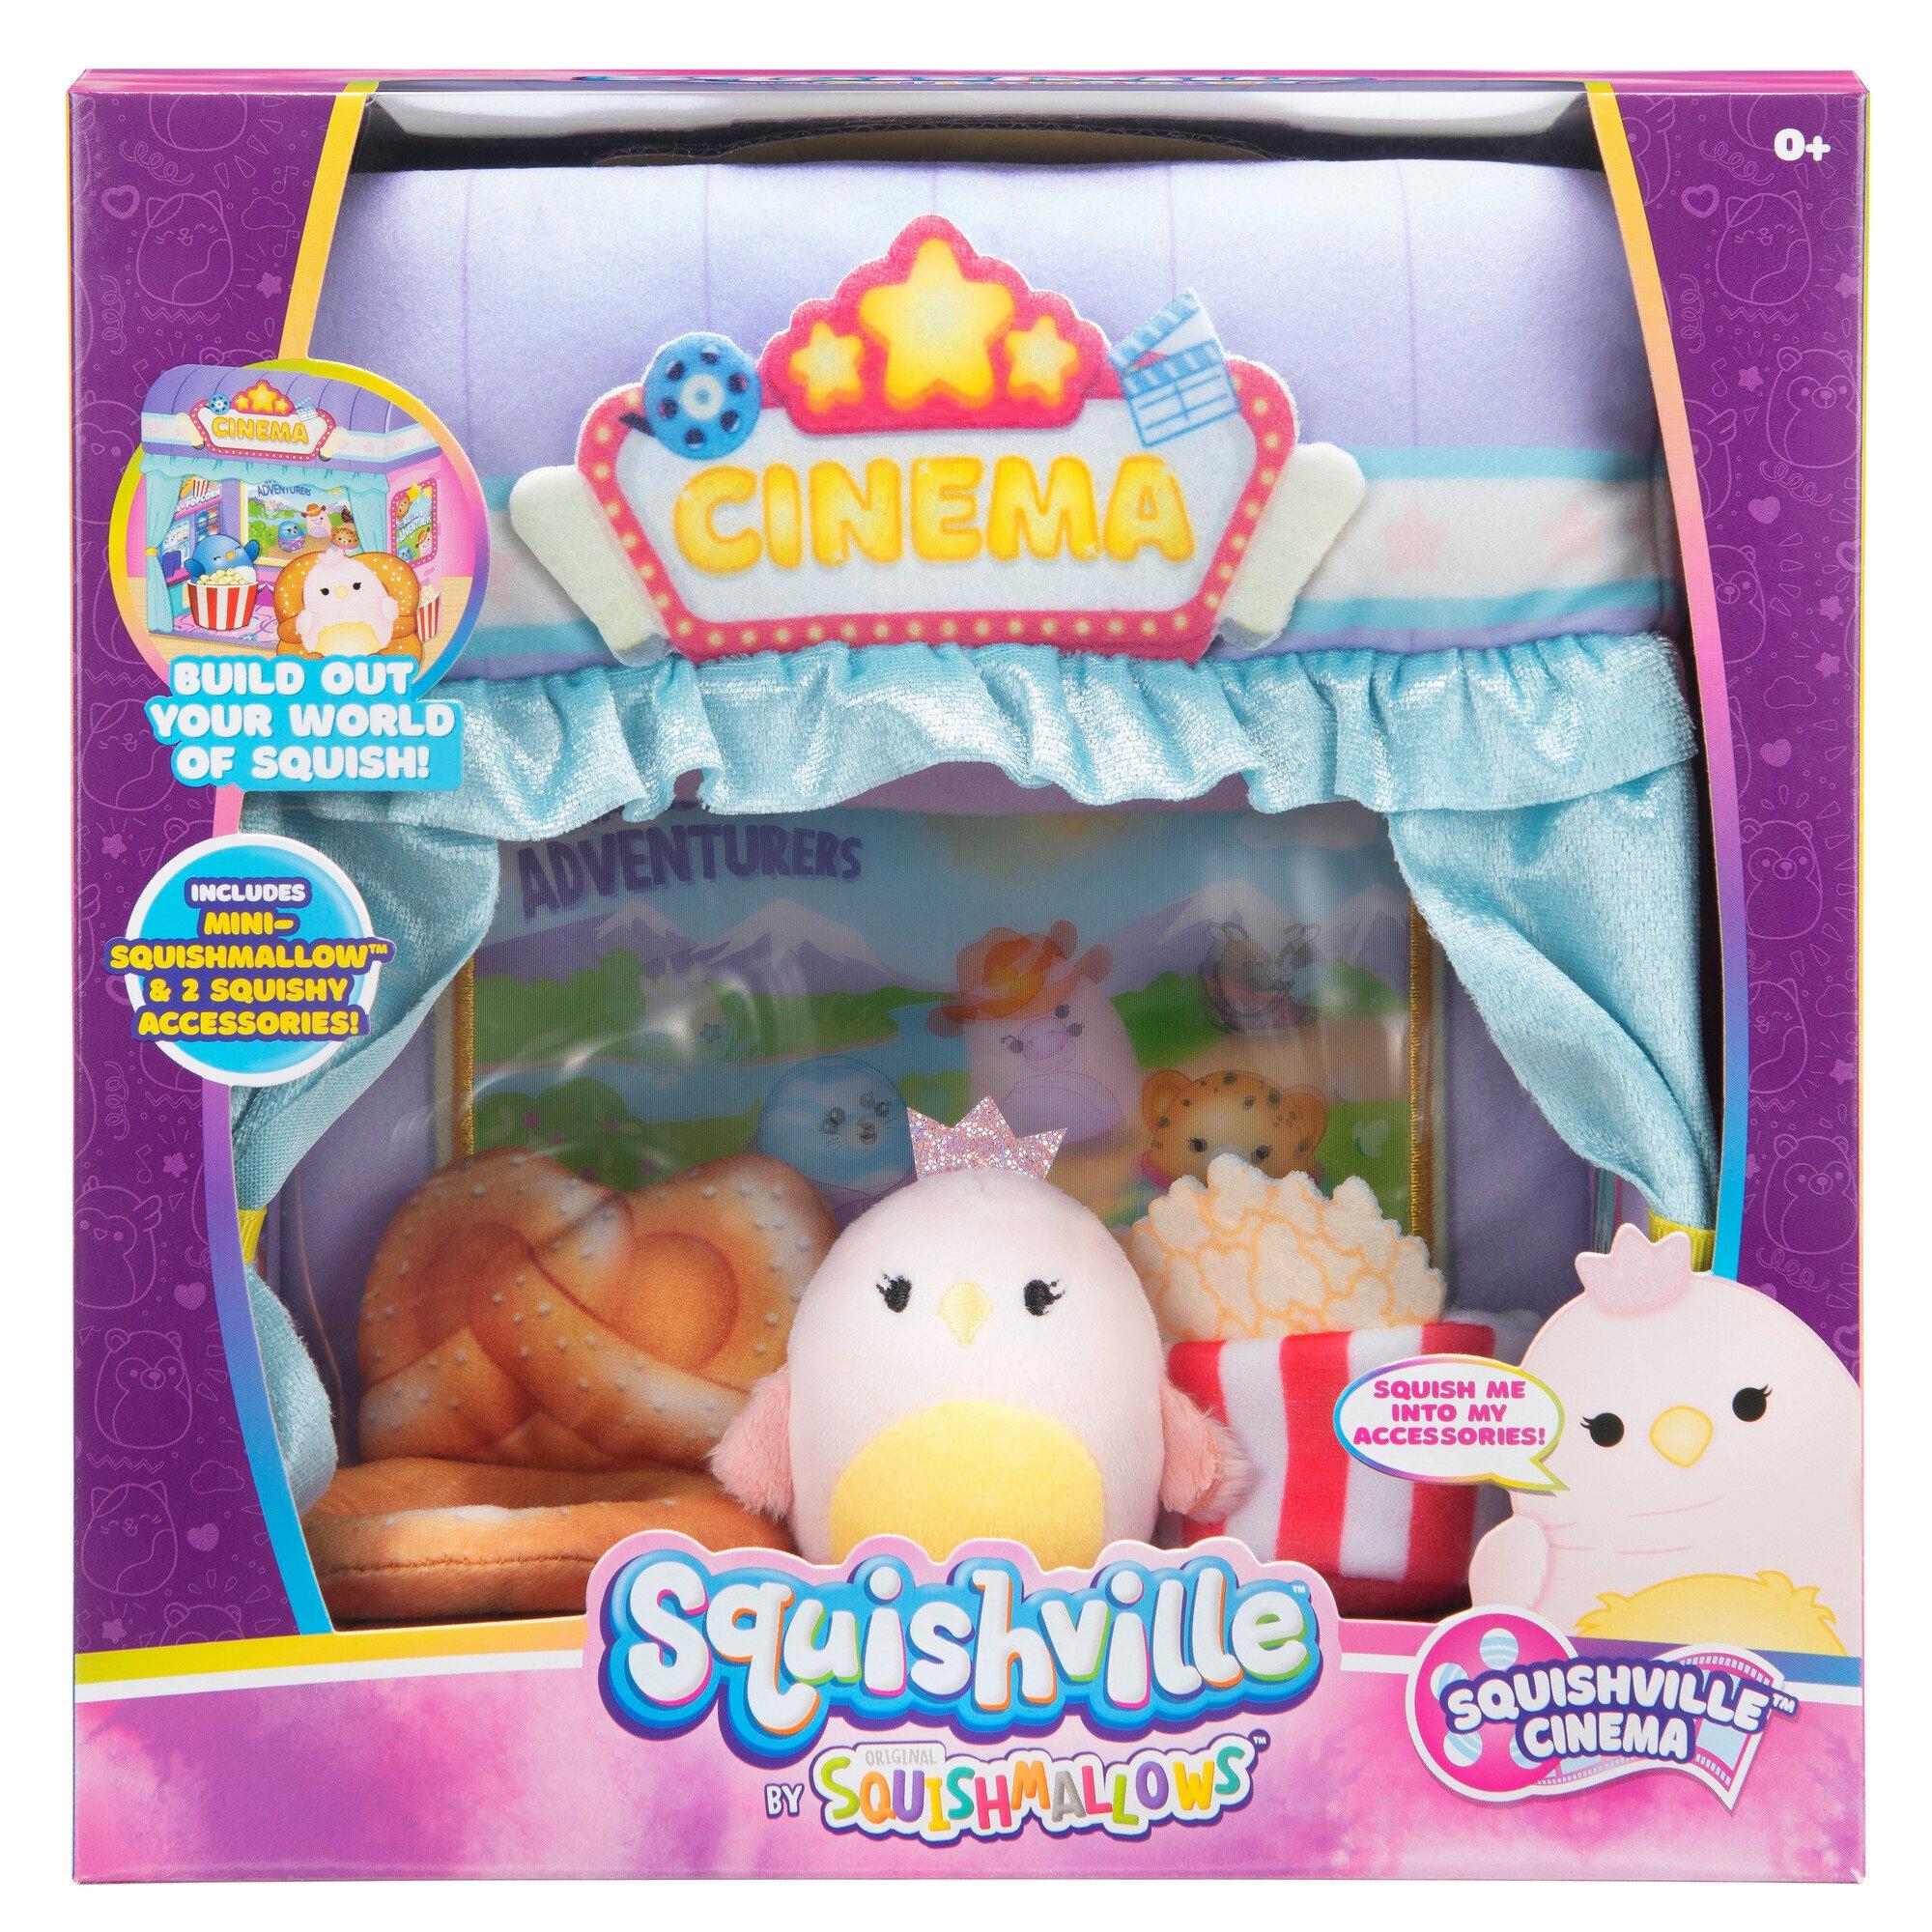 TARGET SQUISHVILLE DISPLAY CASE #Shorts #squishmallows #squishville 